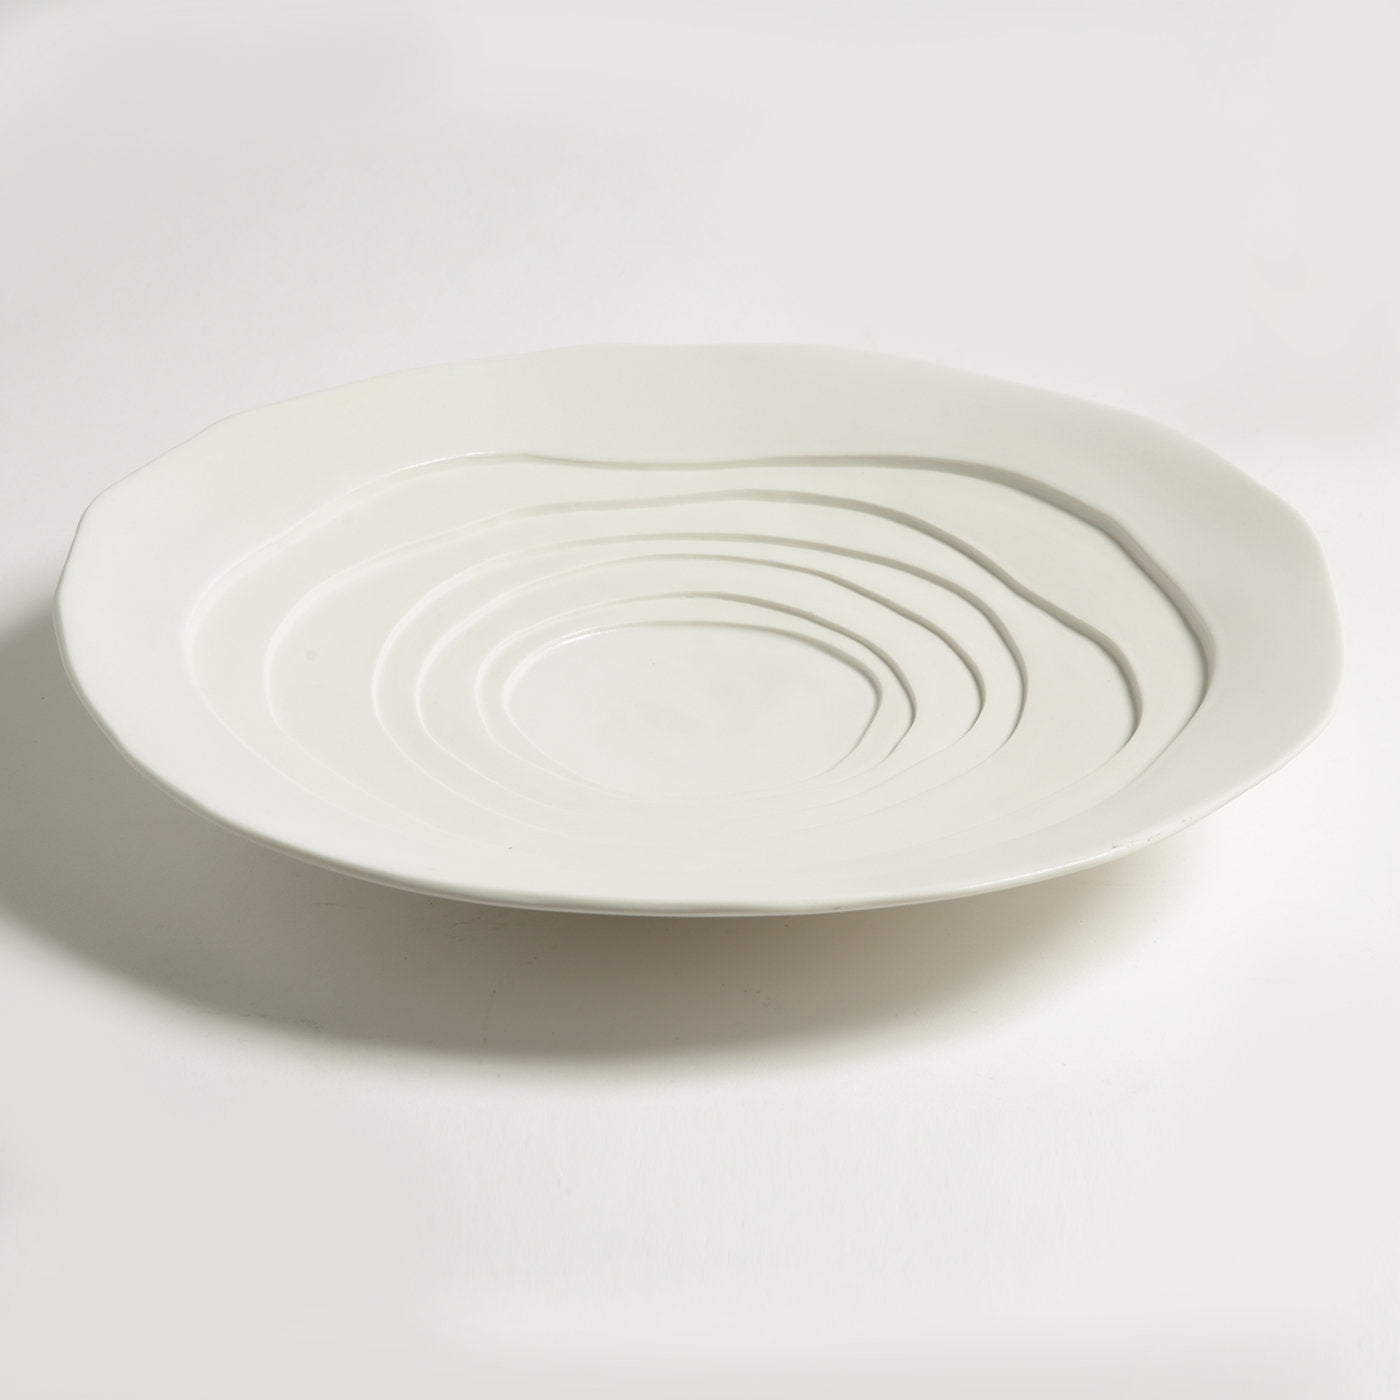 Erosum White Plate - Alternative view 1